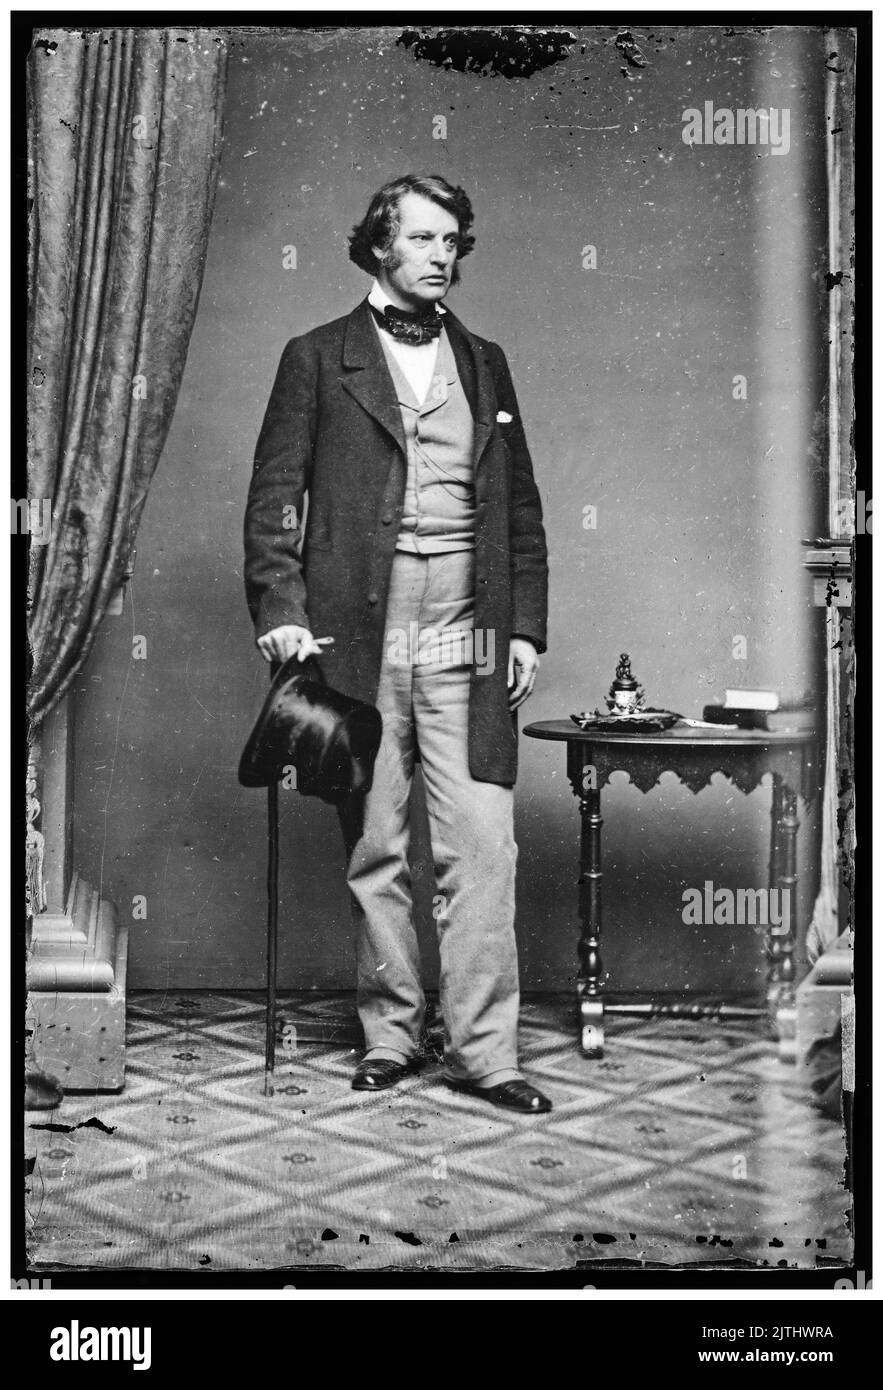 Charles Sumner (1811-1874), American statesman and US Senator, abolitionist, leader of the Radical Republicans, portrait photograph by Mathew Brady Studio, 1860-1870 Stock Photo